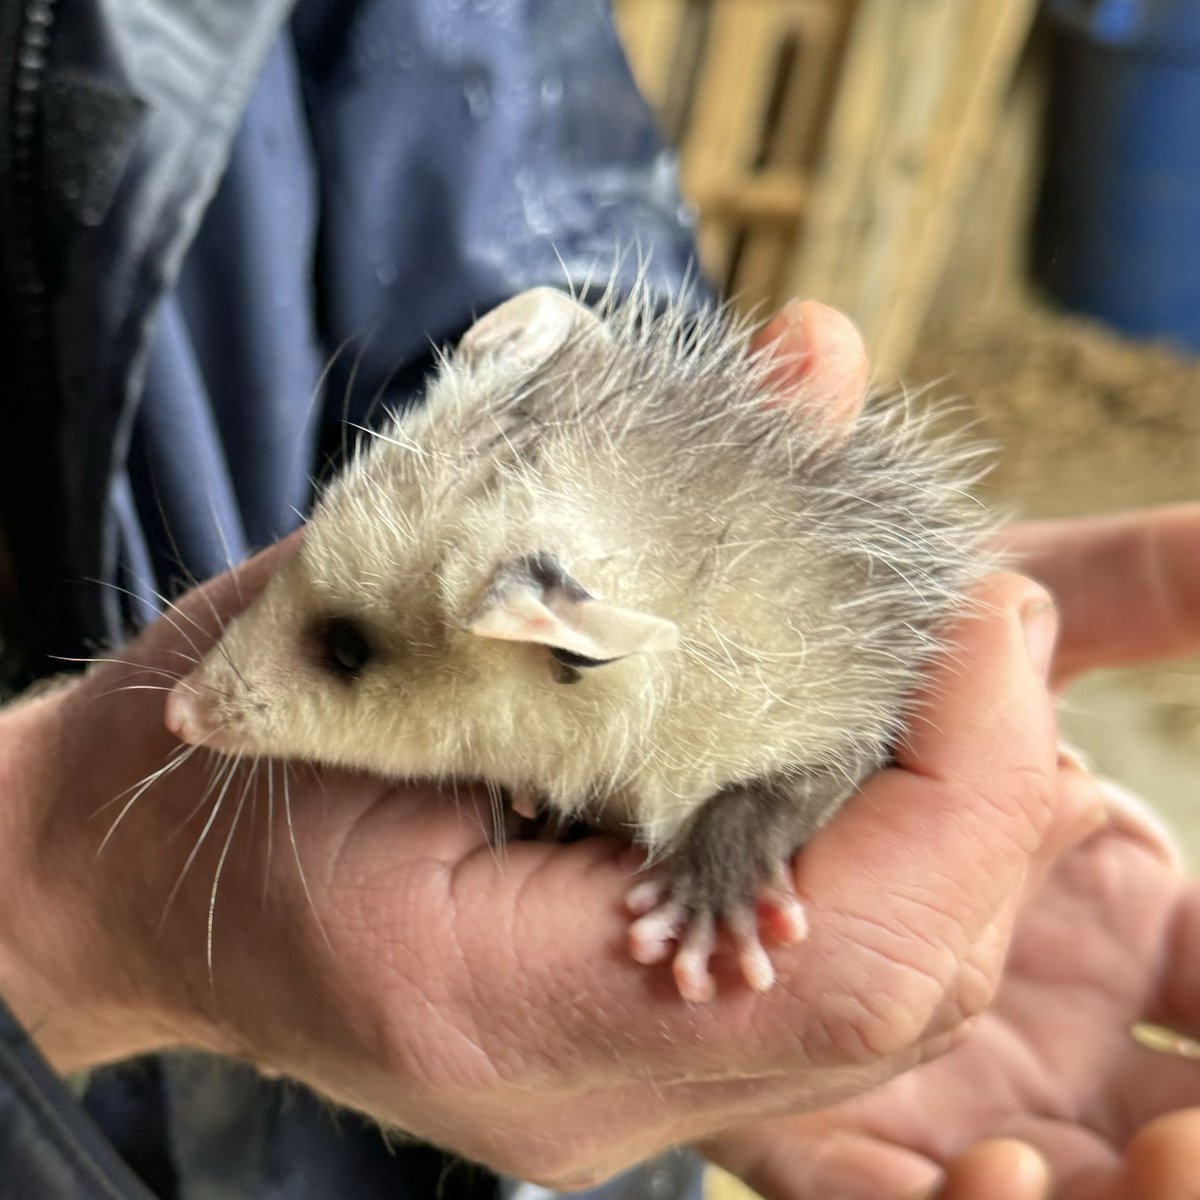 Look at this cute, tiny baby possum! 🐾❤️ #CuteCritter #TinyPossum #BabyPossum #AdorableAnimals #WildlifeLove #NatureCuties #ctnaturefans #earthmonk